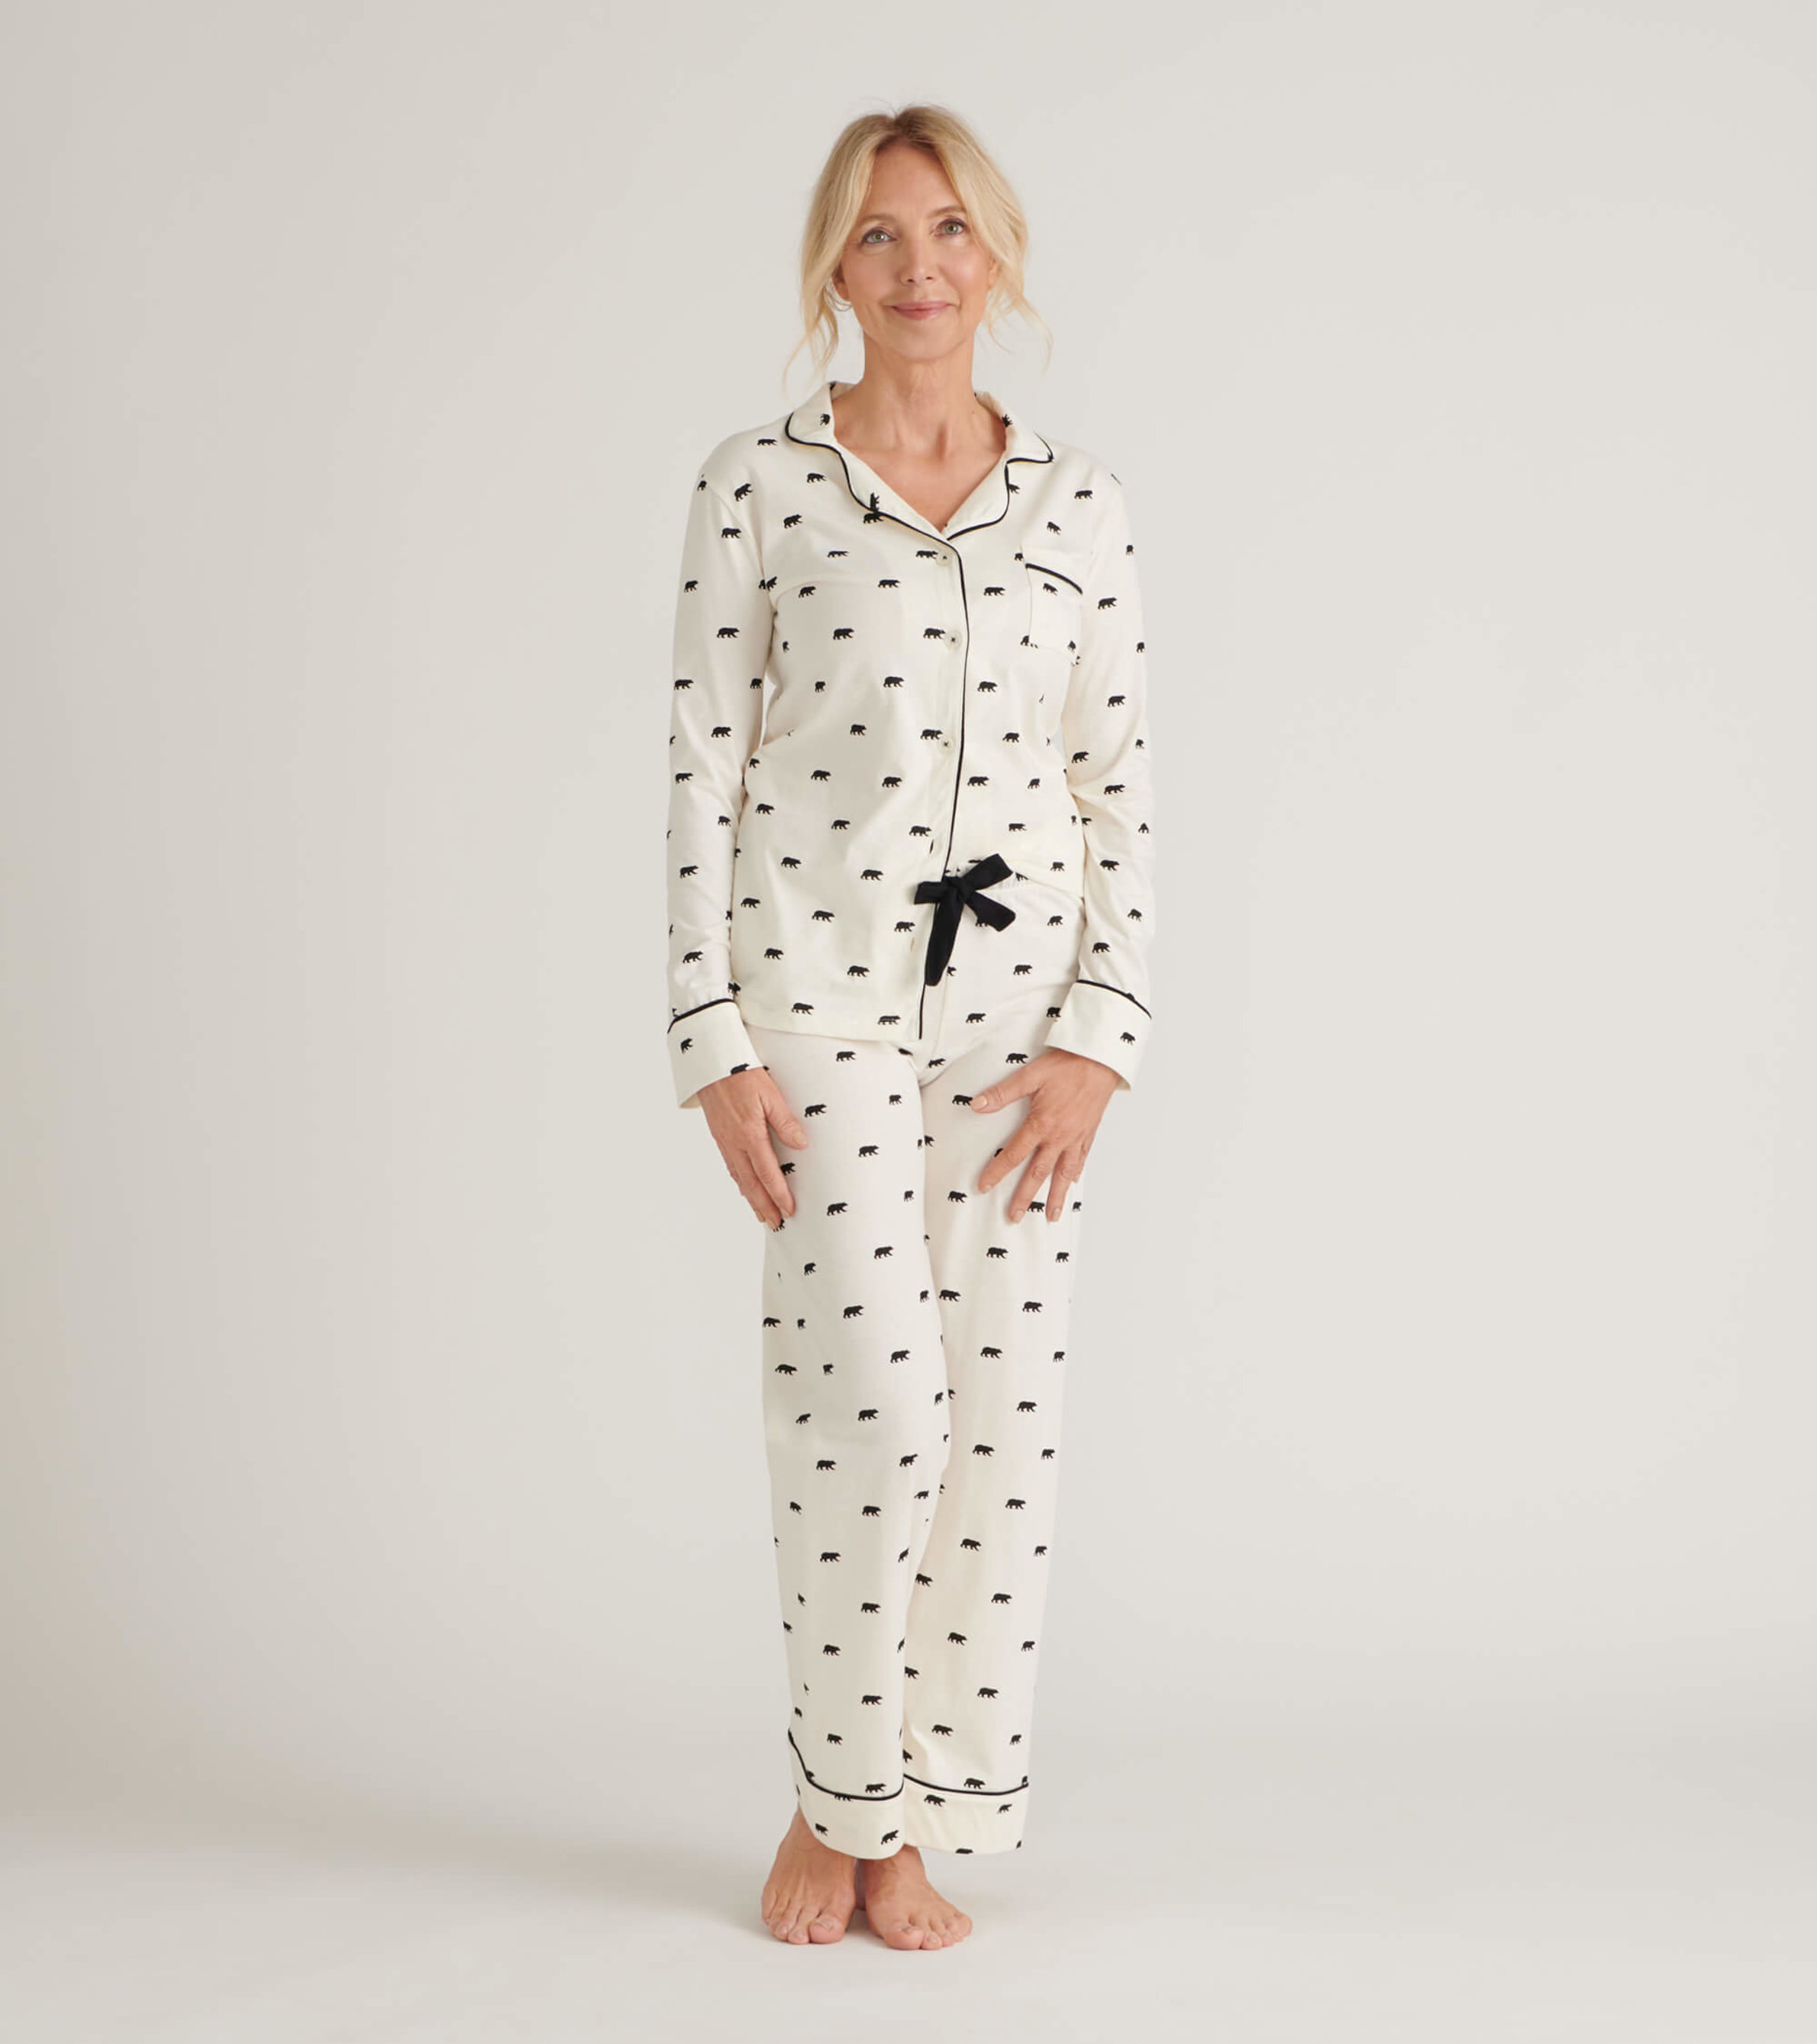 Bear Cartoon Print Womens Cotton Gauze Pajama Set Autumn/Winter